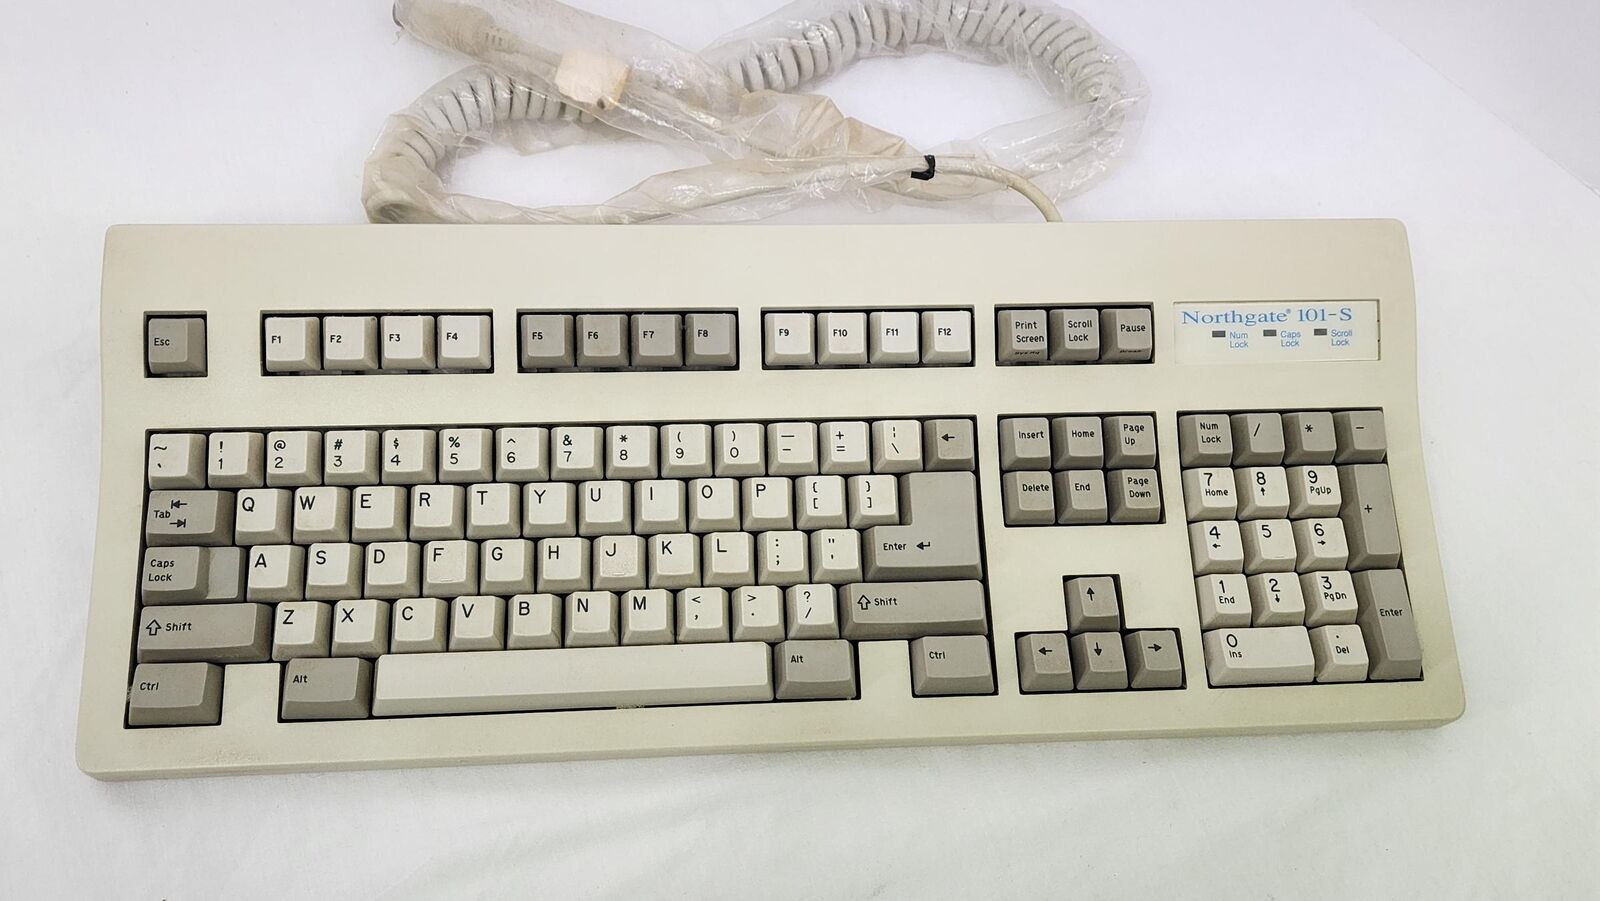 Northgate Mechanical Keyboard (101-S) - 1992, Vintage, White, Working